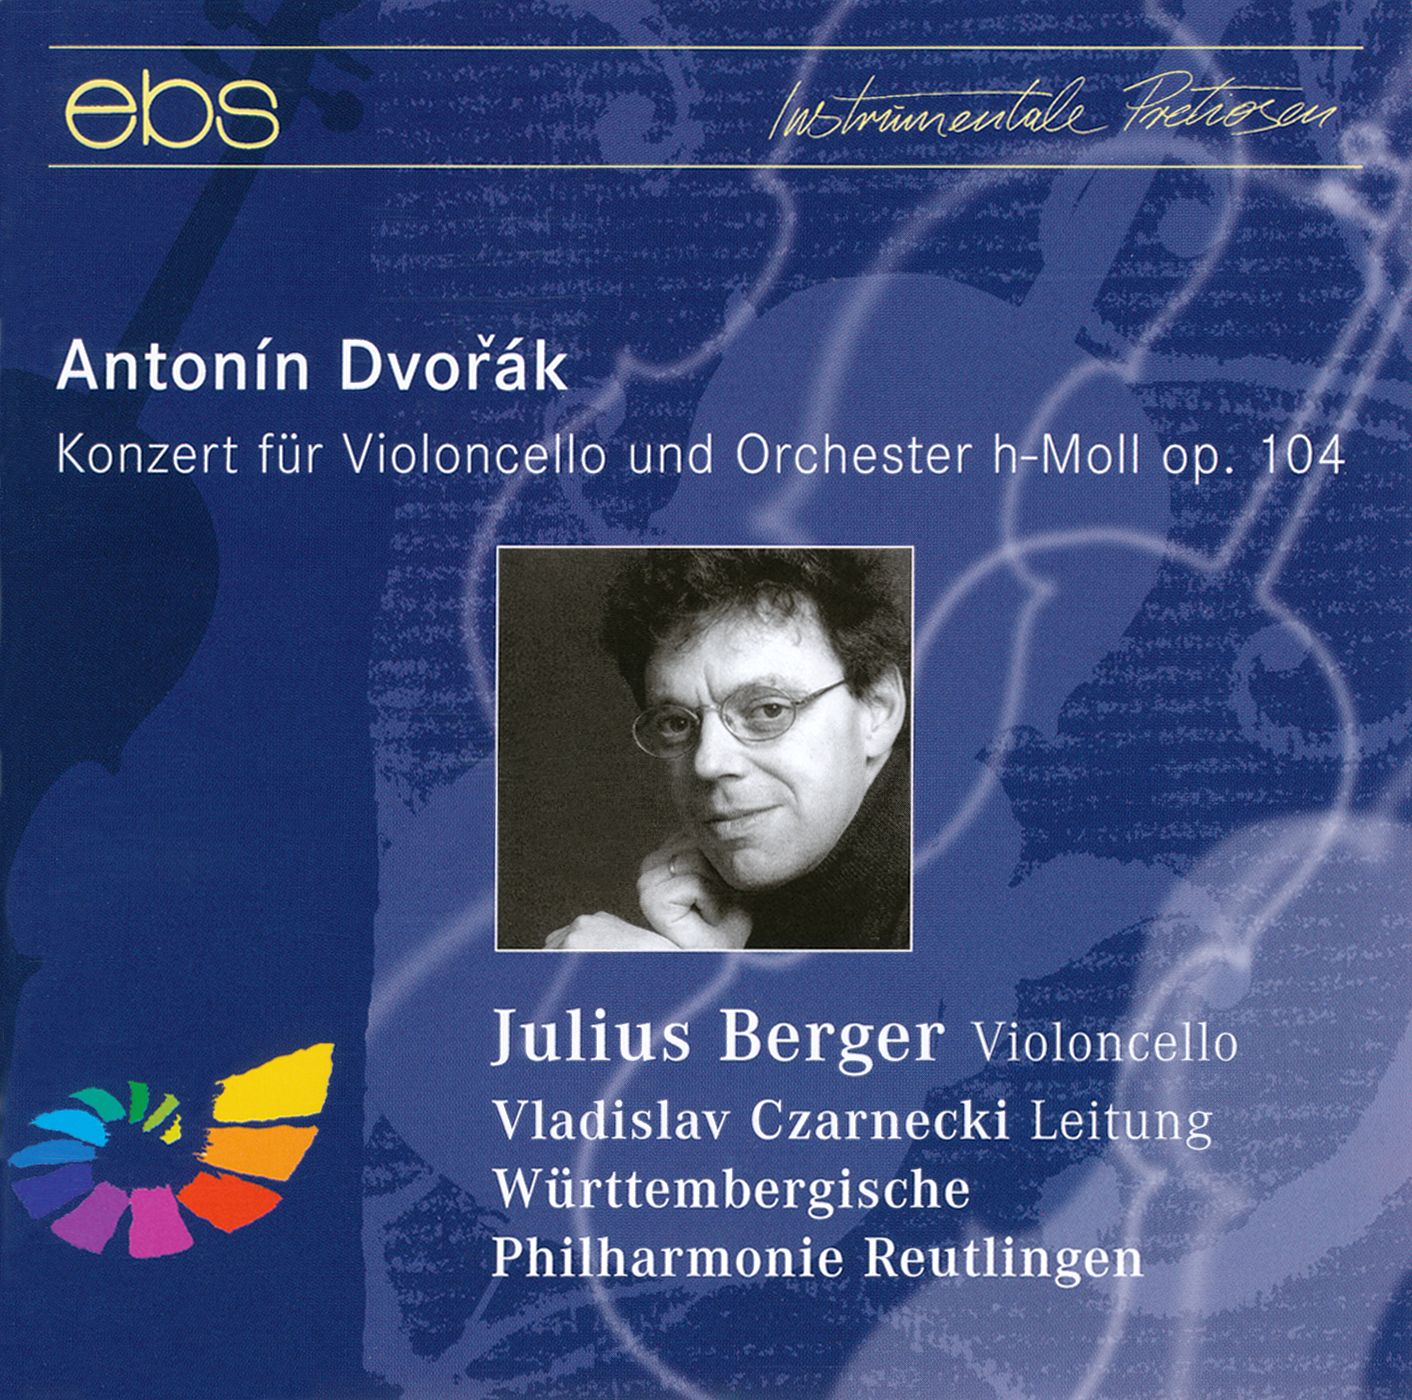 Antonin Dvorak - Cellokonzert